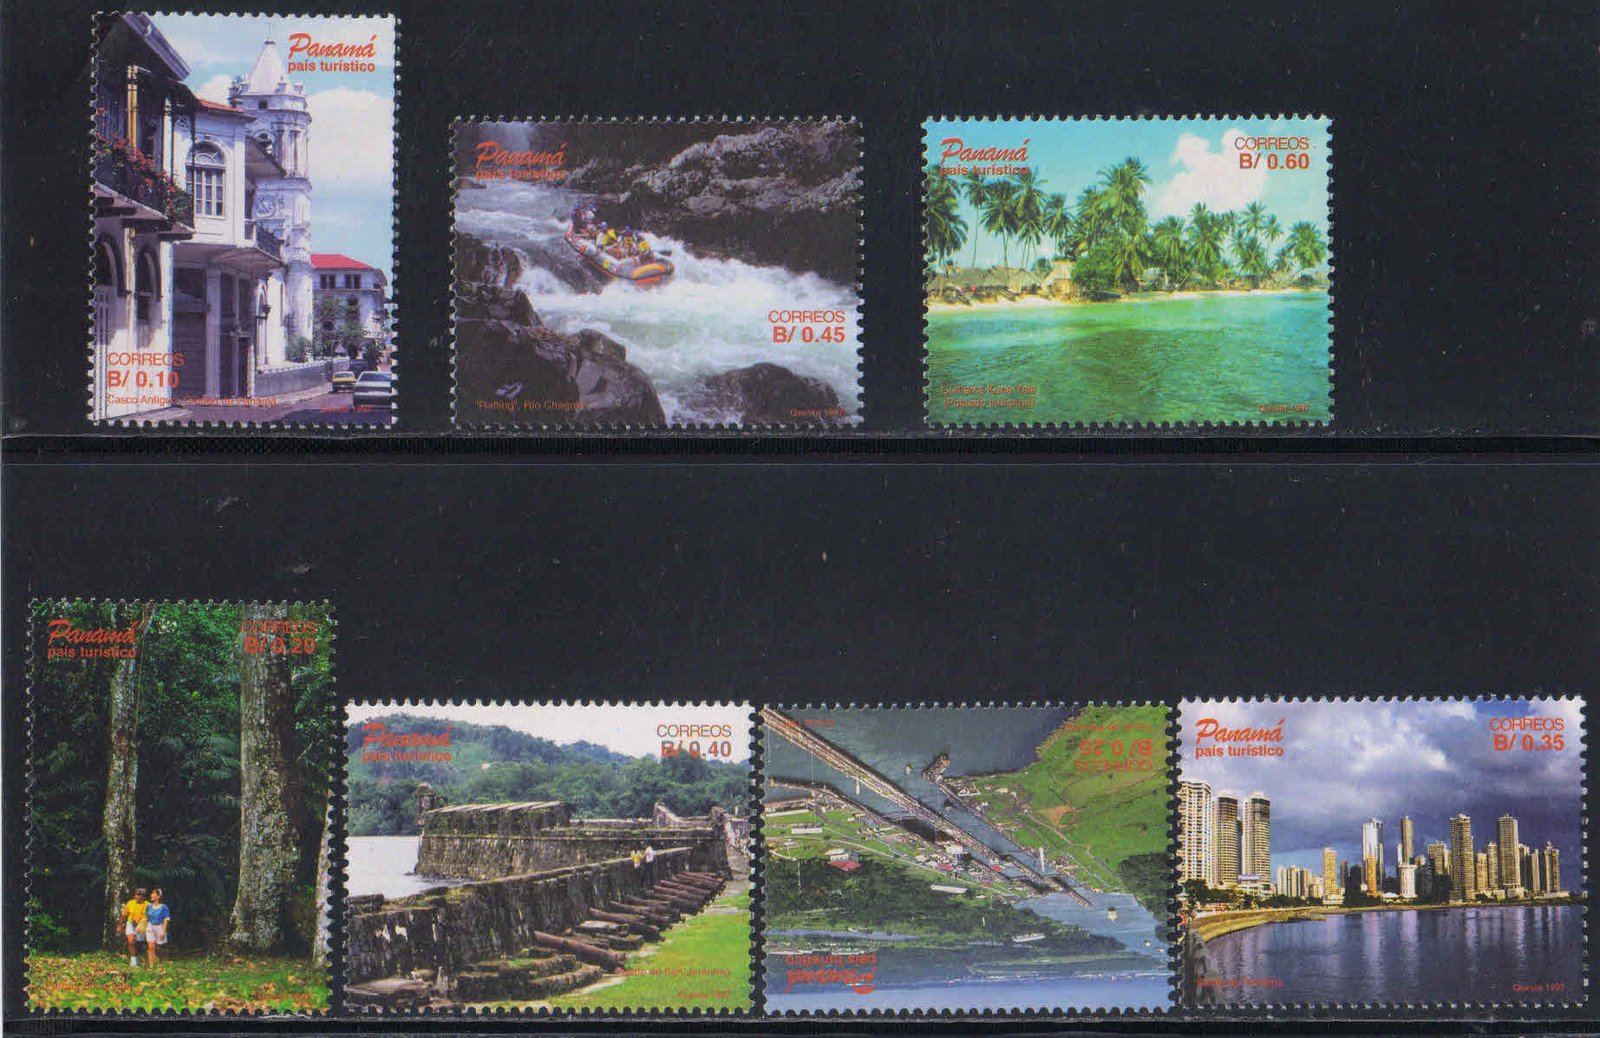 PANAMA 1998-Tourism, Rainforest, Panama Canal, Fort, Beach, Rafting, Set of 7, MNH, S.G. 1614-1620